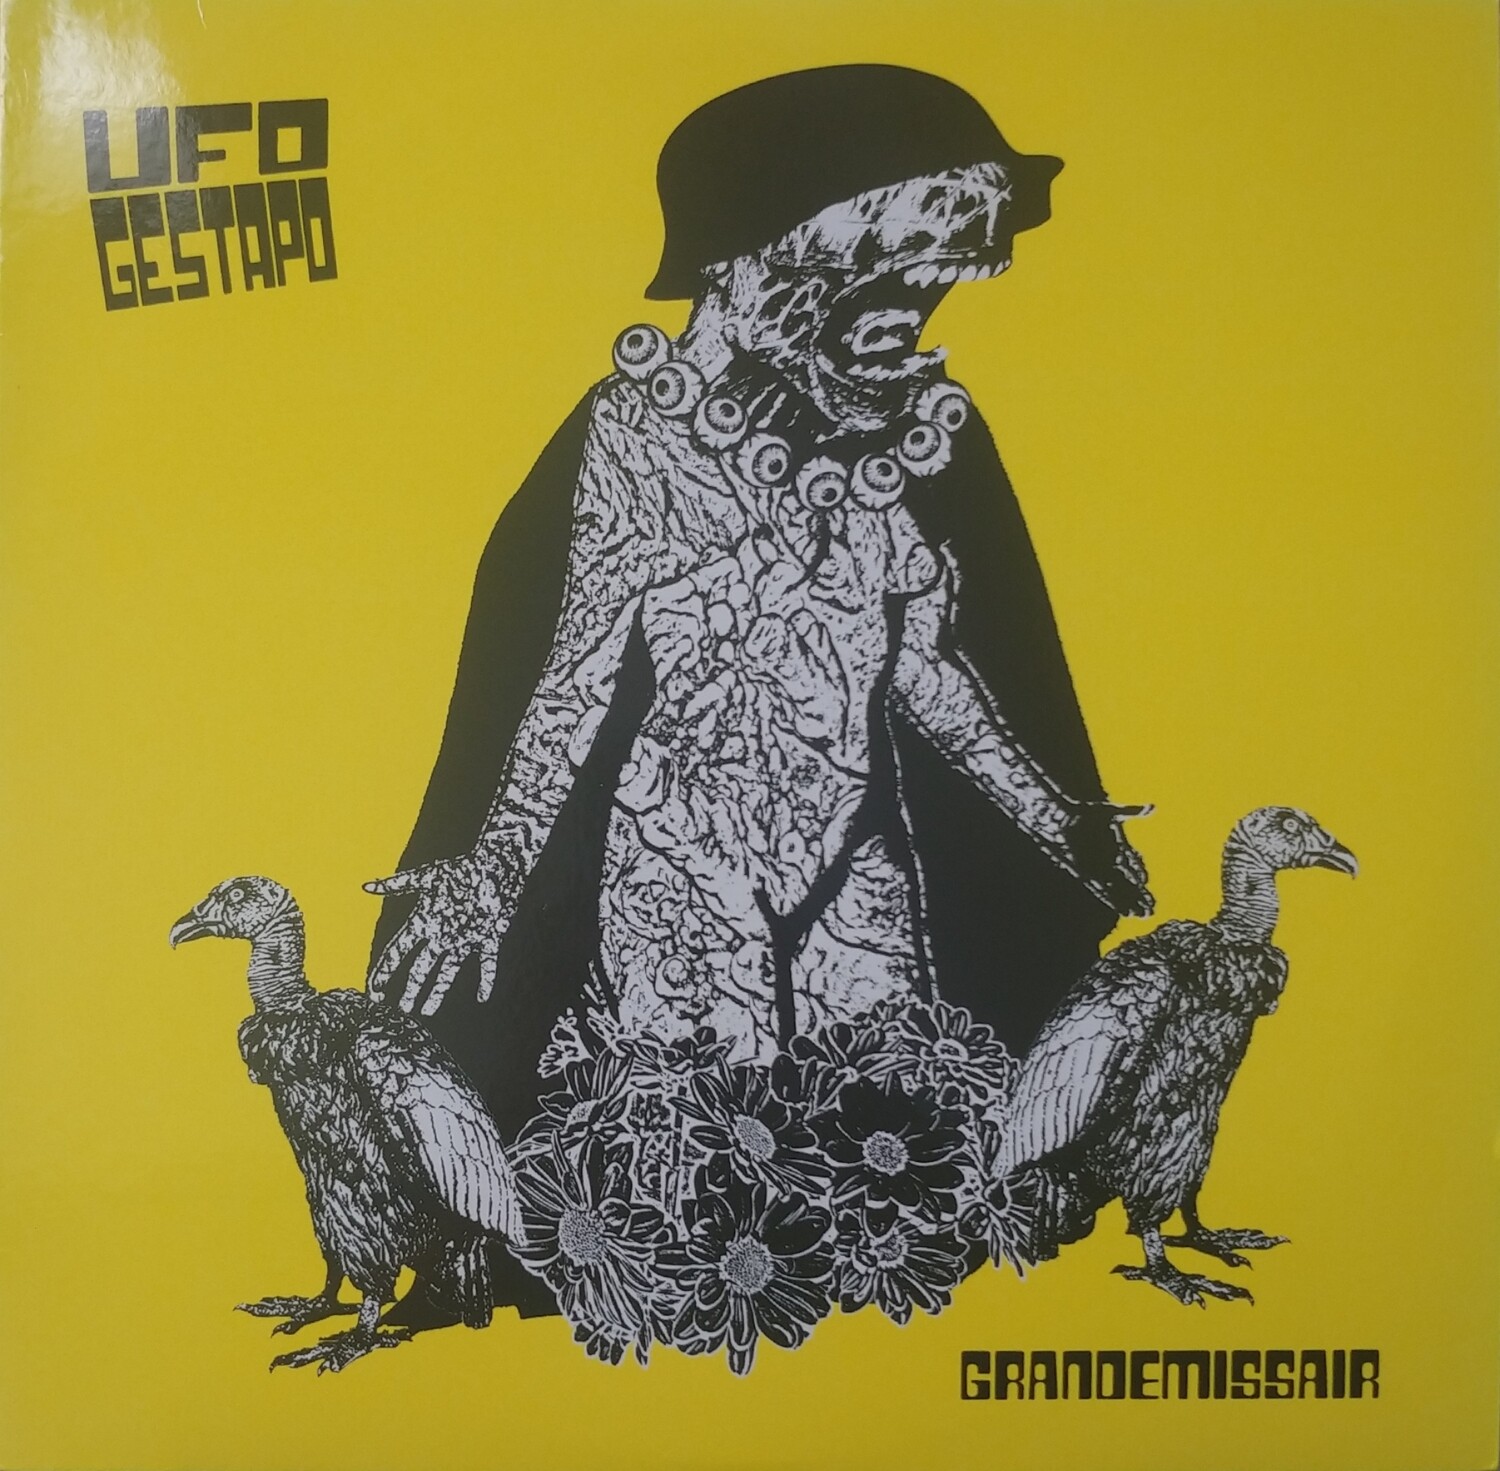 UFO Gestapo - Grandemissair (Clear Vinyl)